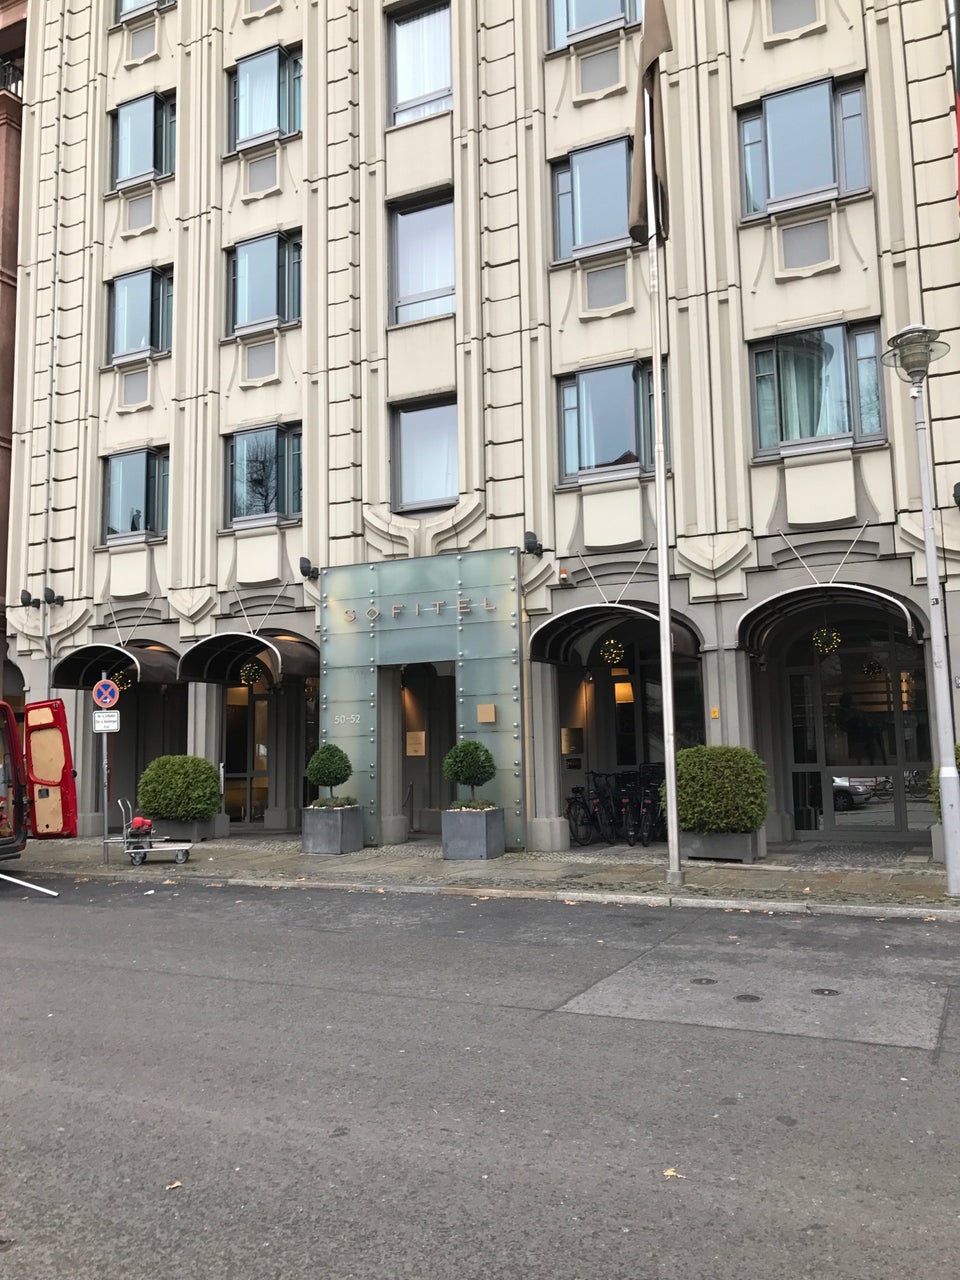 Photo of Sofitel Berlin Gendarmenmarkt Hotel